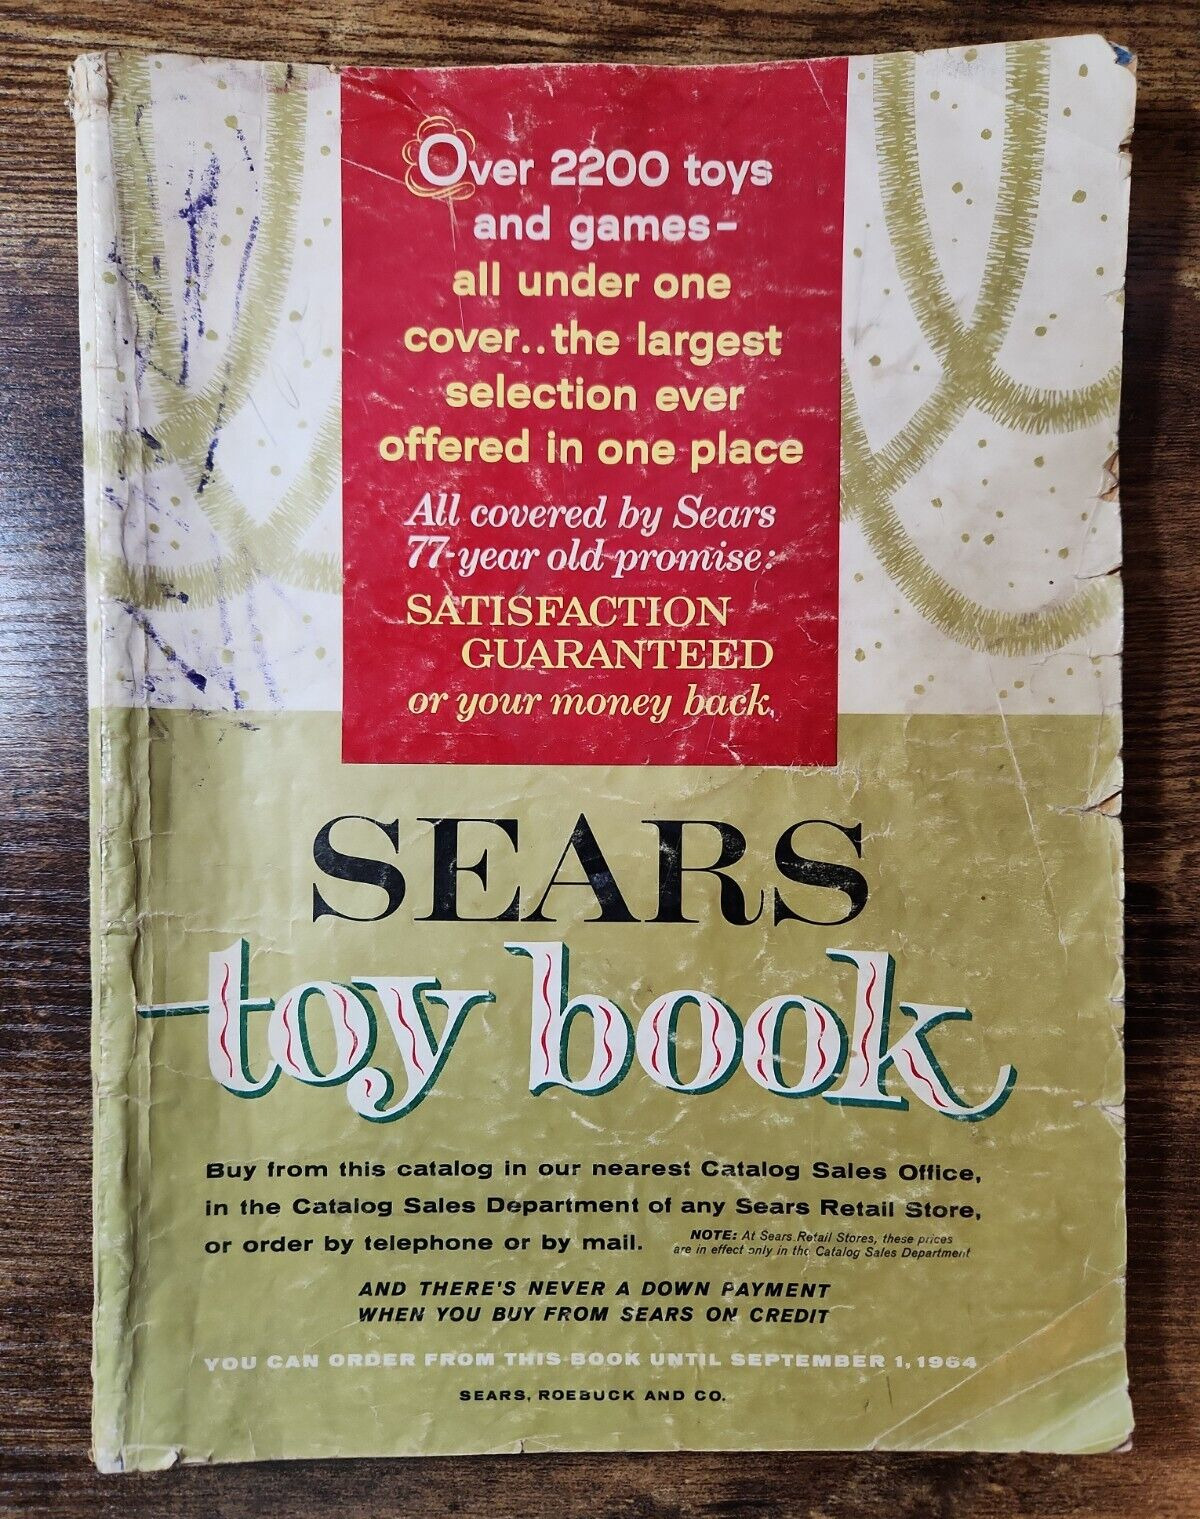 1964 Sears Toy Book Catalog - Vintage Sears Roebuck & Company Wish Book - Rare